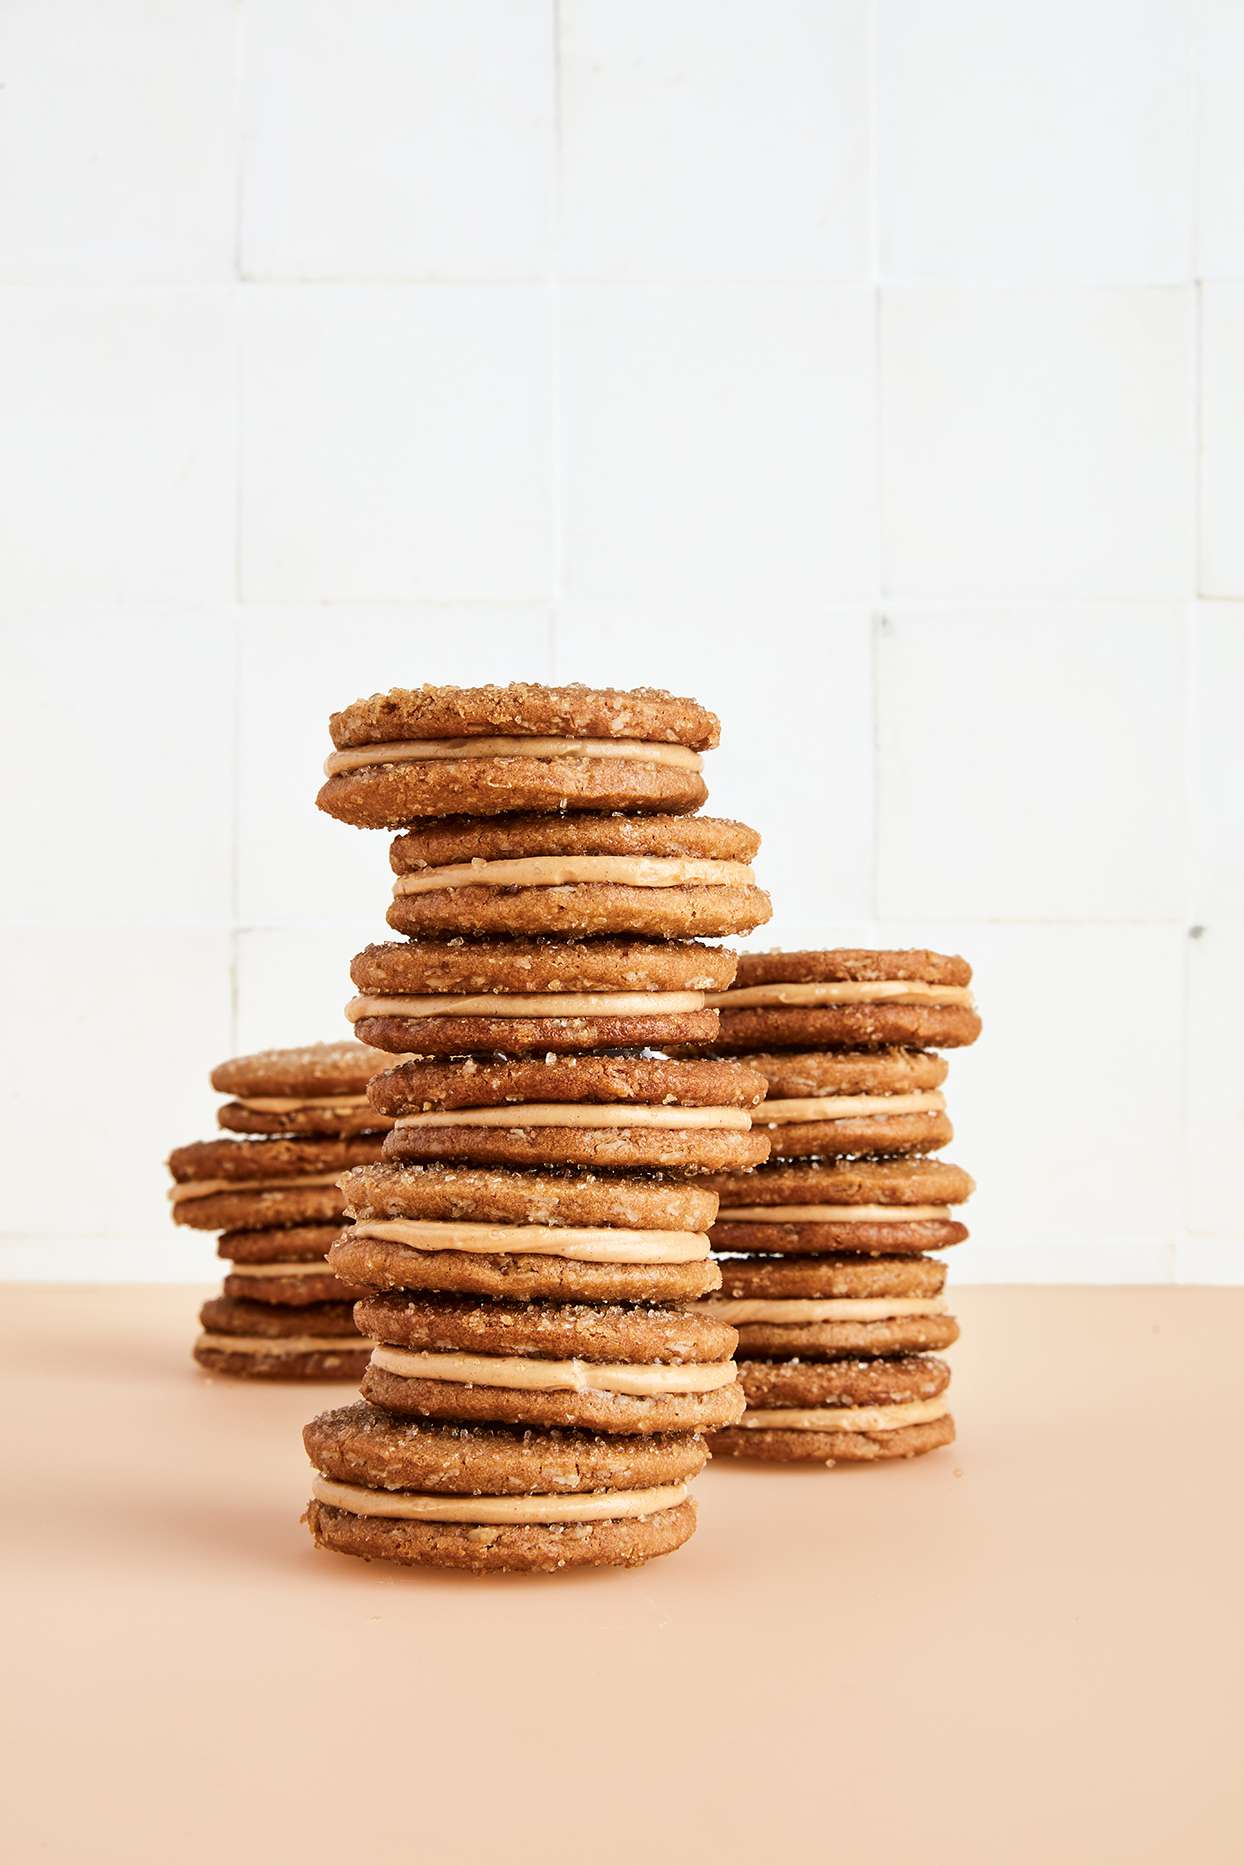 stacks of peanut butter sandwich cookies